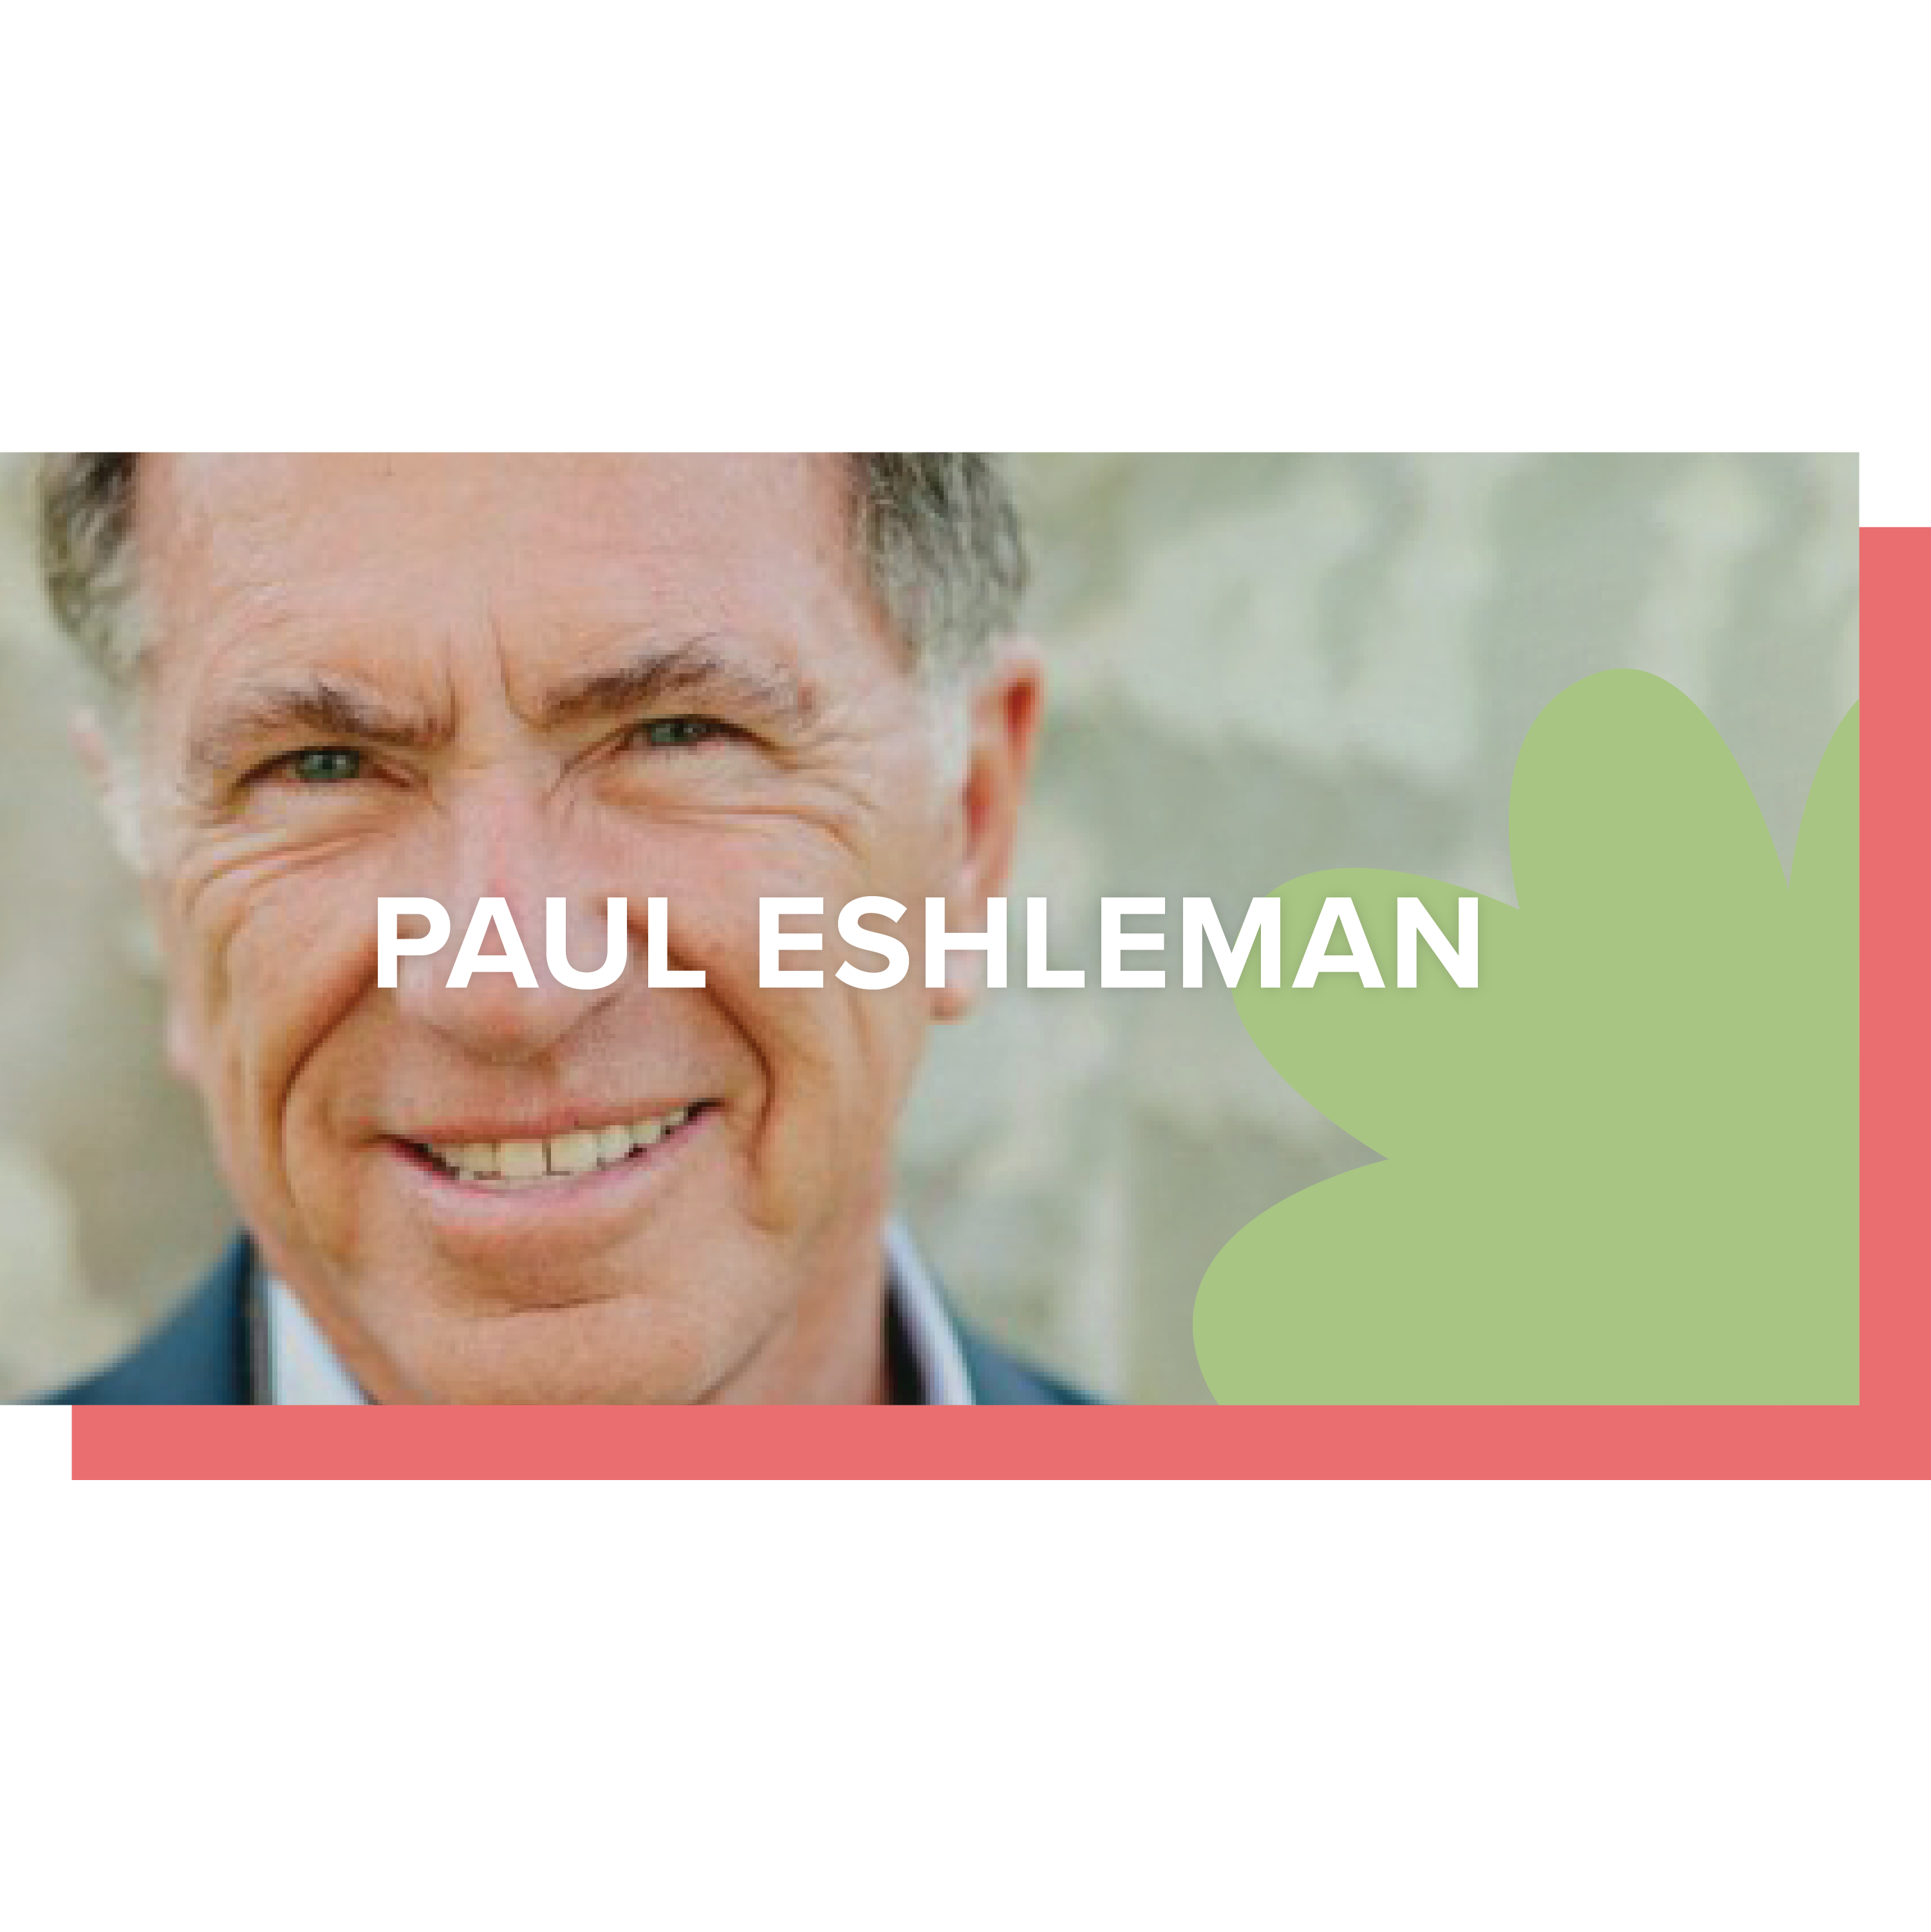 Paul Eshleman